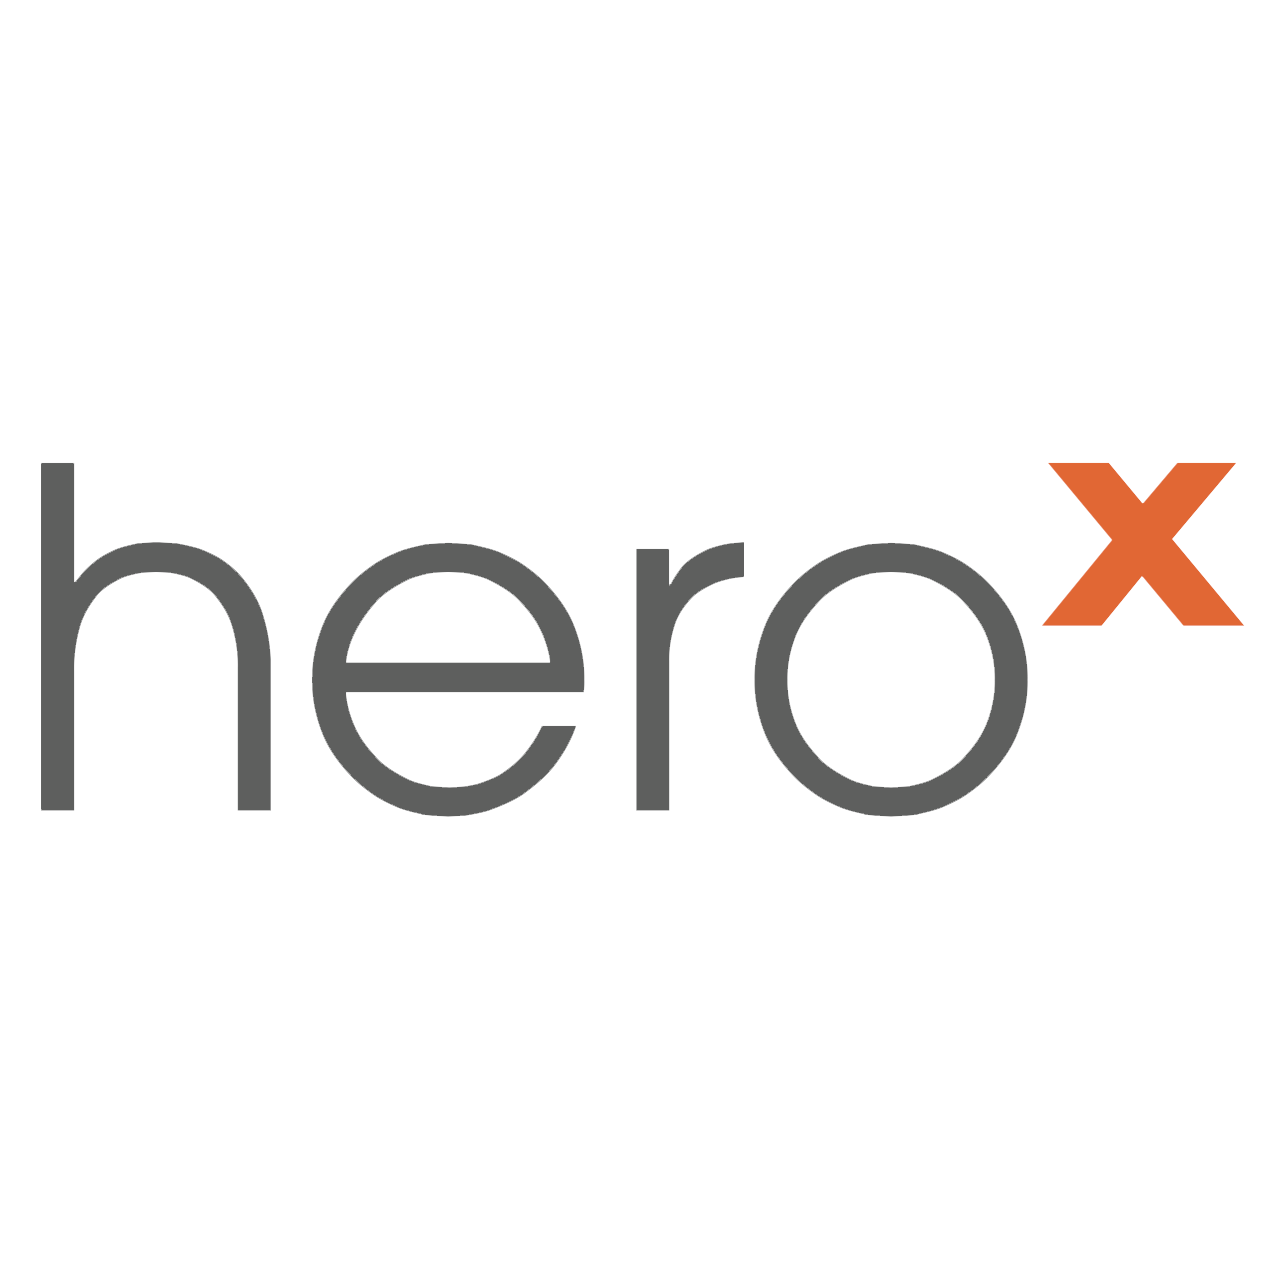 Crowdsourcing Platform for Enterprises & Innovators | HeroX